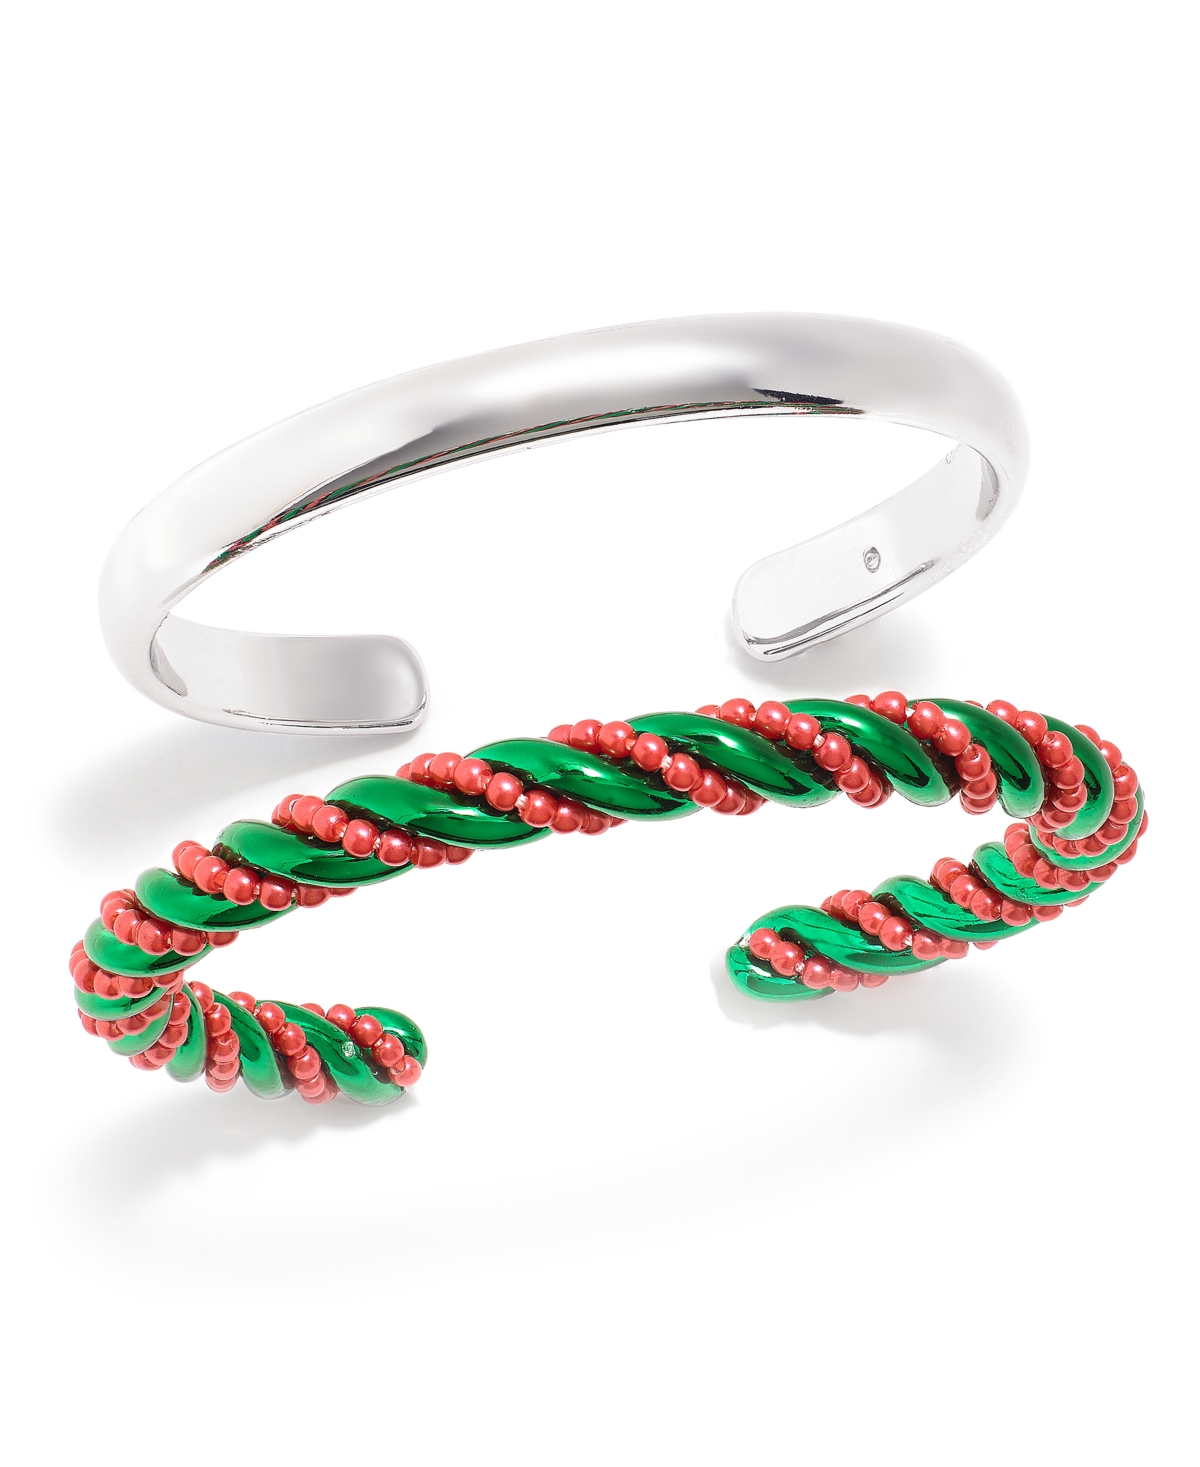 Two-Tone 2-Pc. Set Imitation Pearl Swirl Cuff Bracelets, Created for Macy's - Green